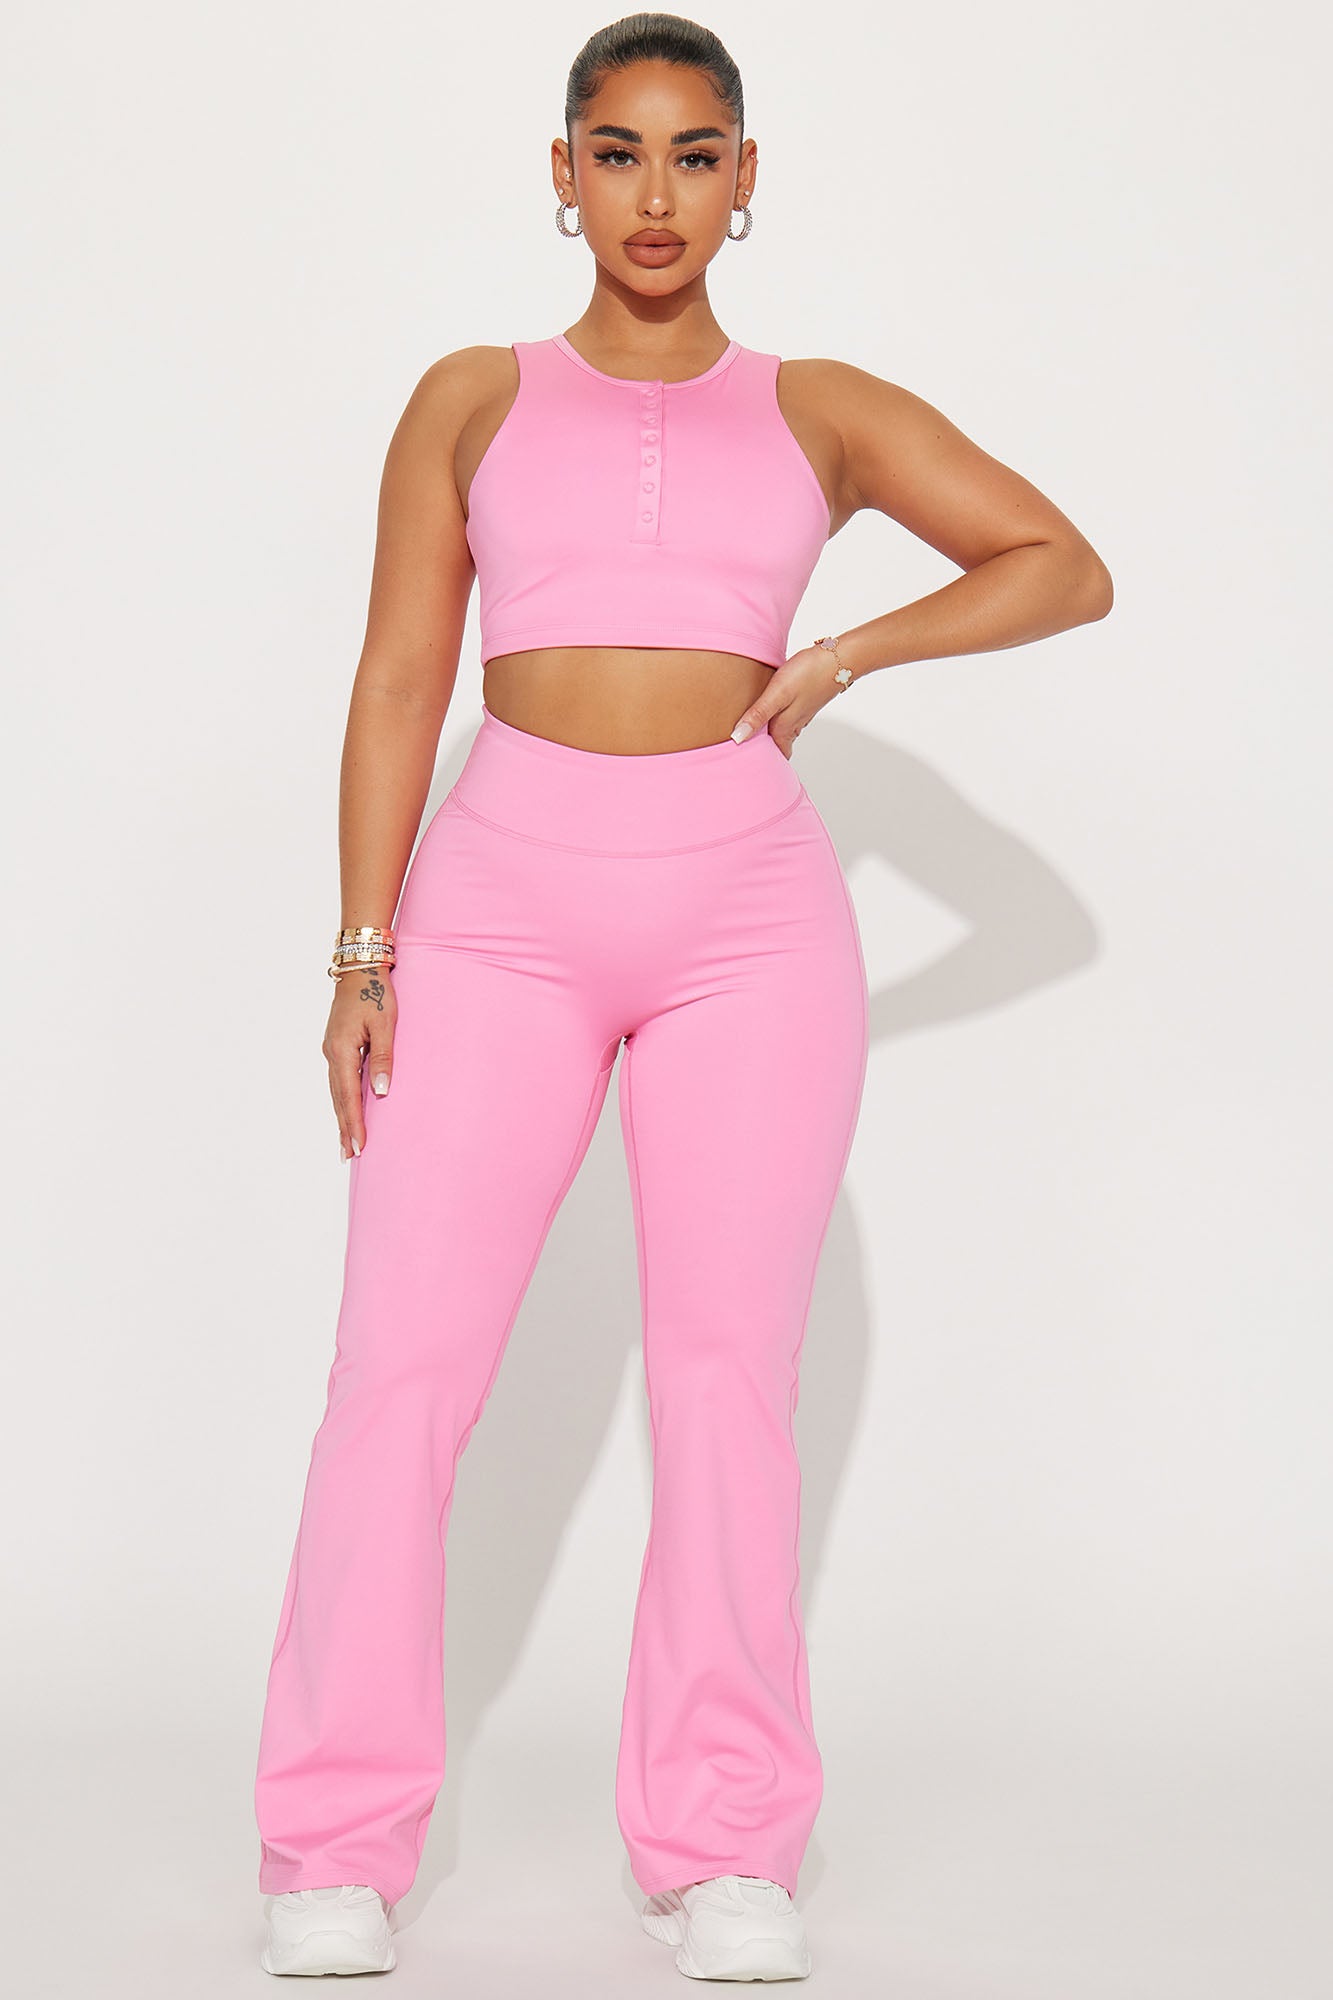 Pants & Jumpsuits, Hot Pink Yoga Pants